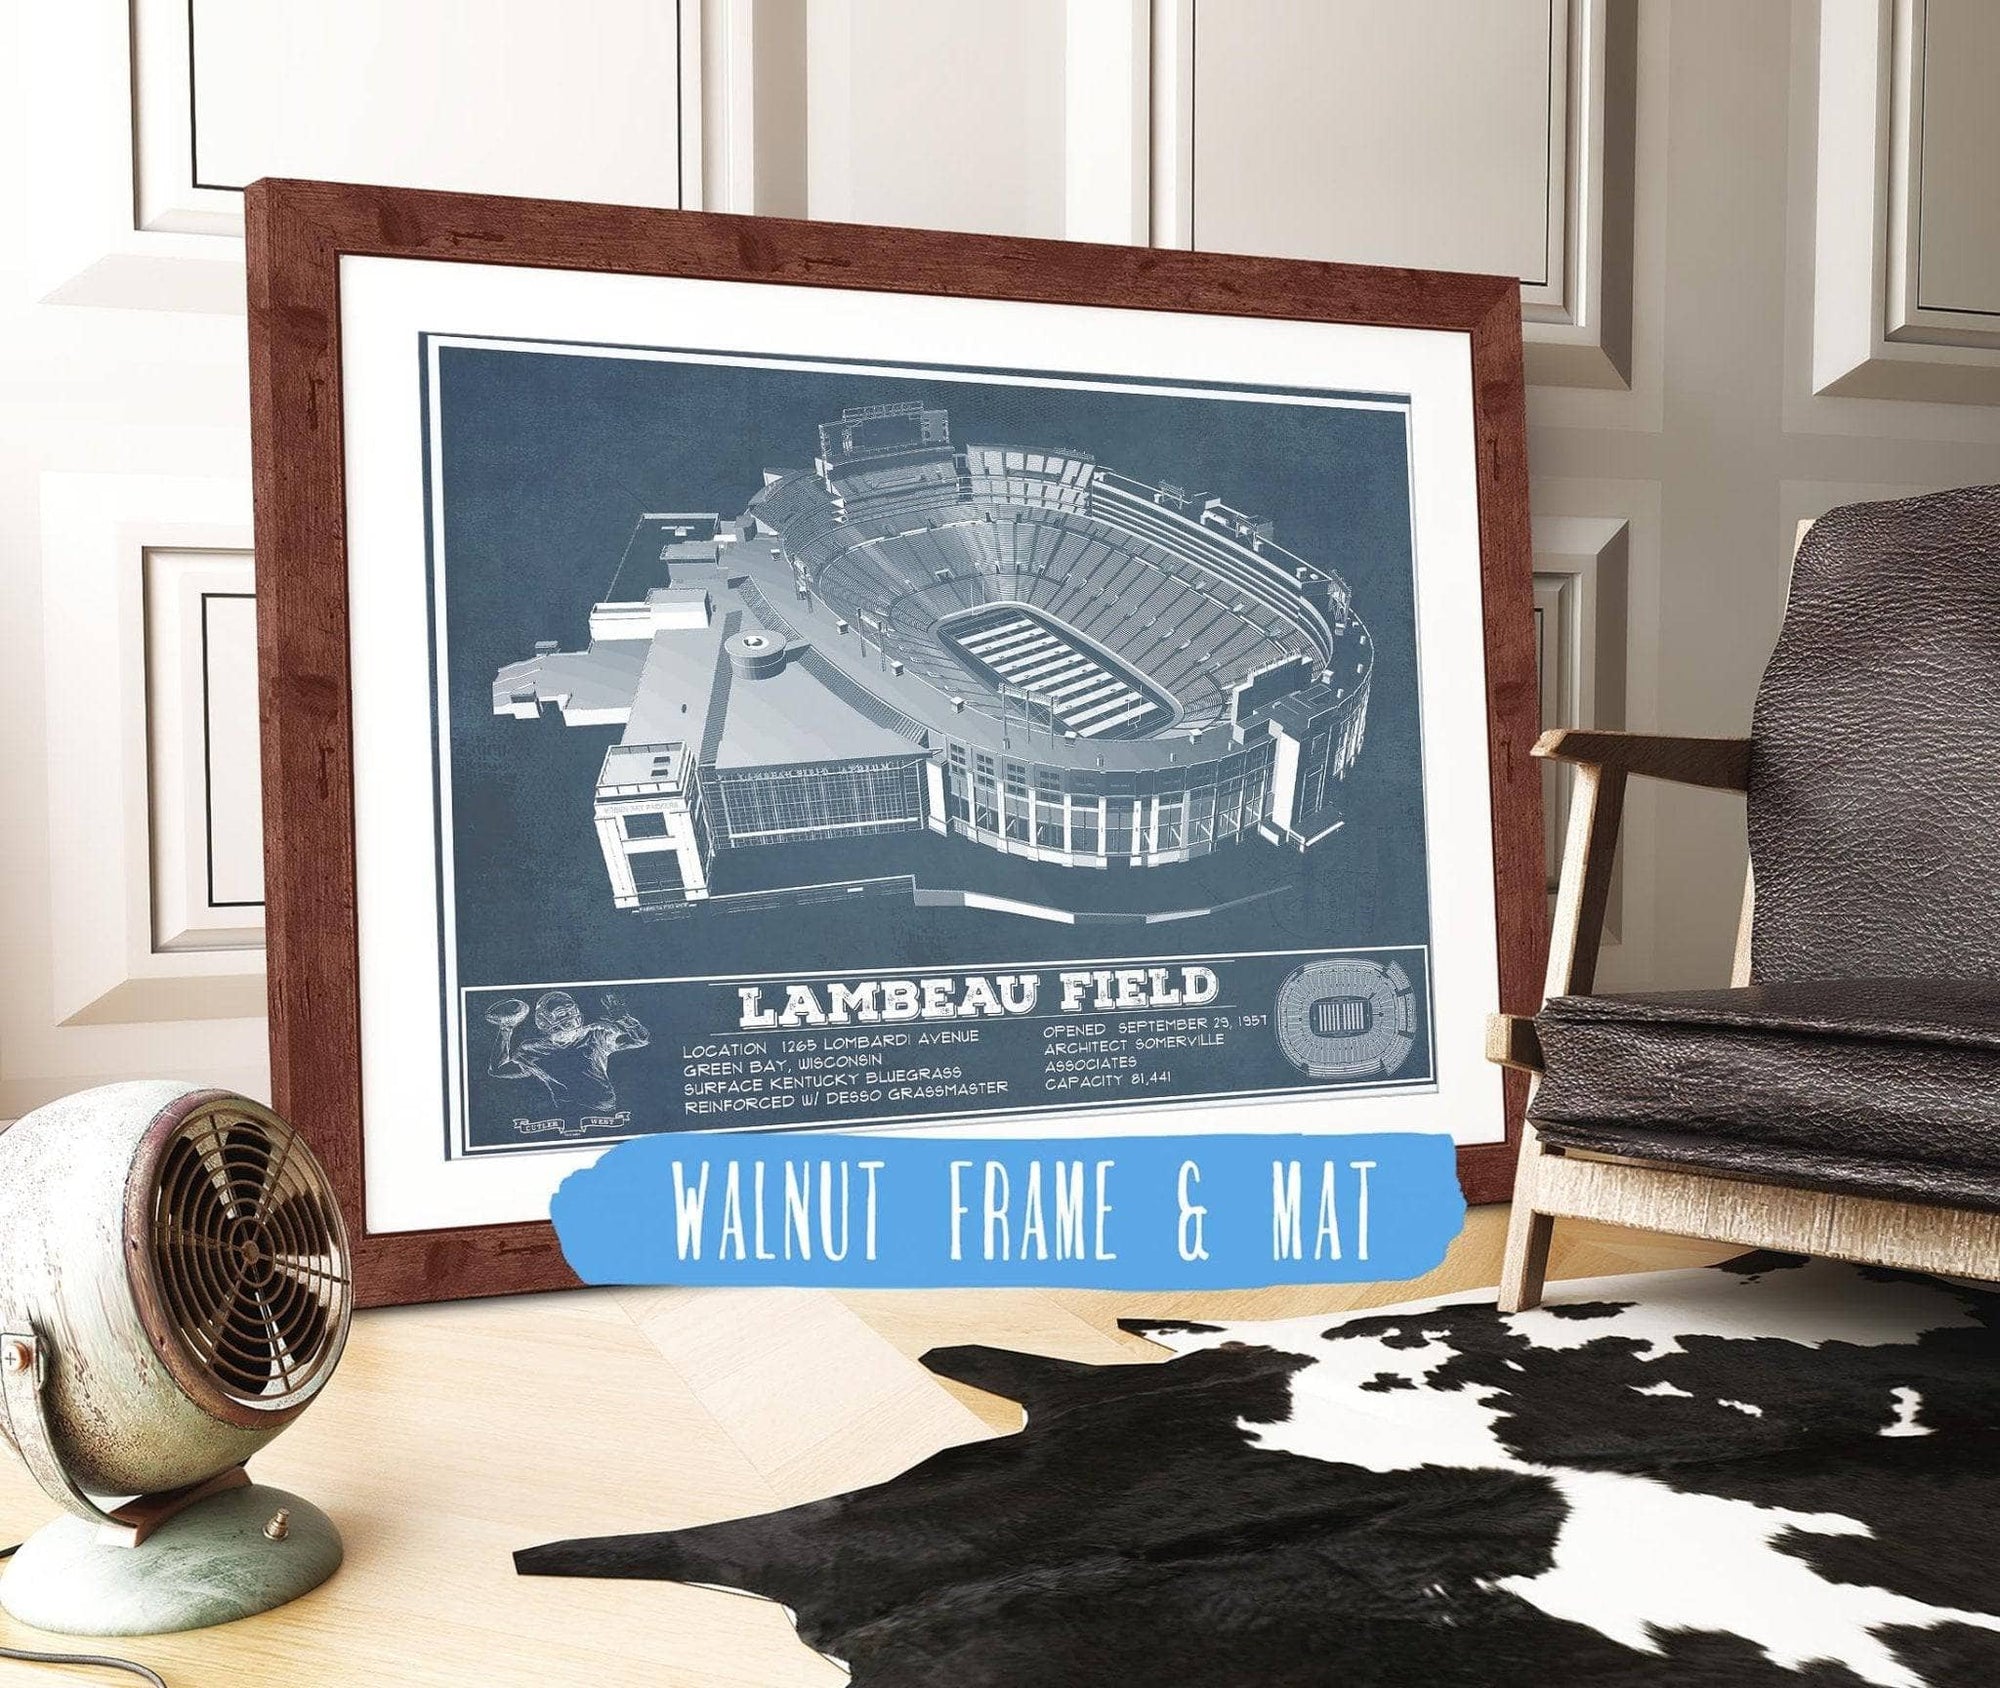 Cutler West Pro Football Collection 14" x 11" / Walnut Frame & Mat Green Bay Packers - Lambeau Field Vintage Football Print 698877220_66032